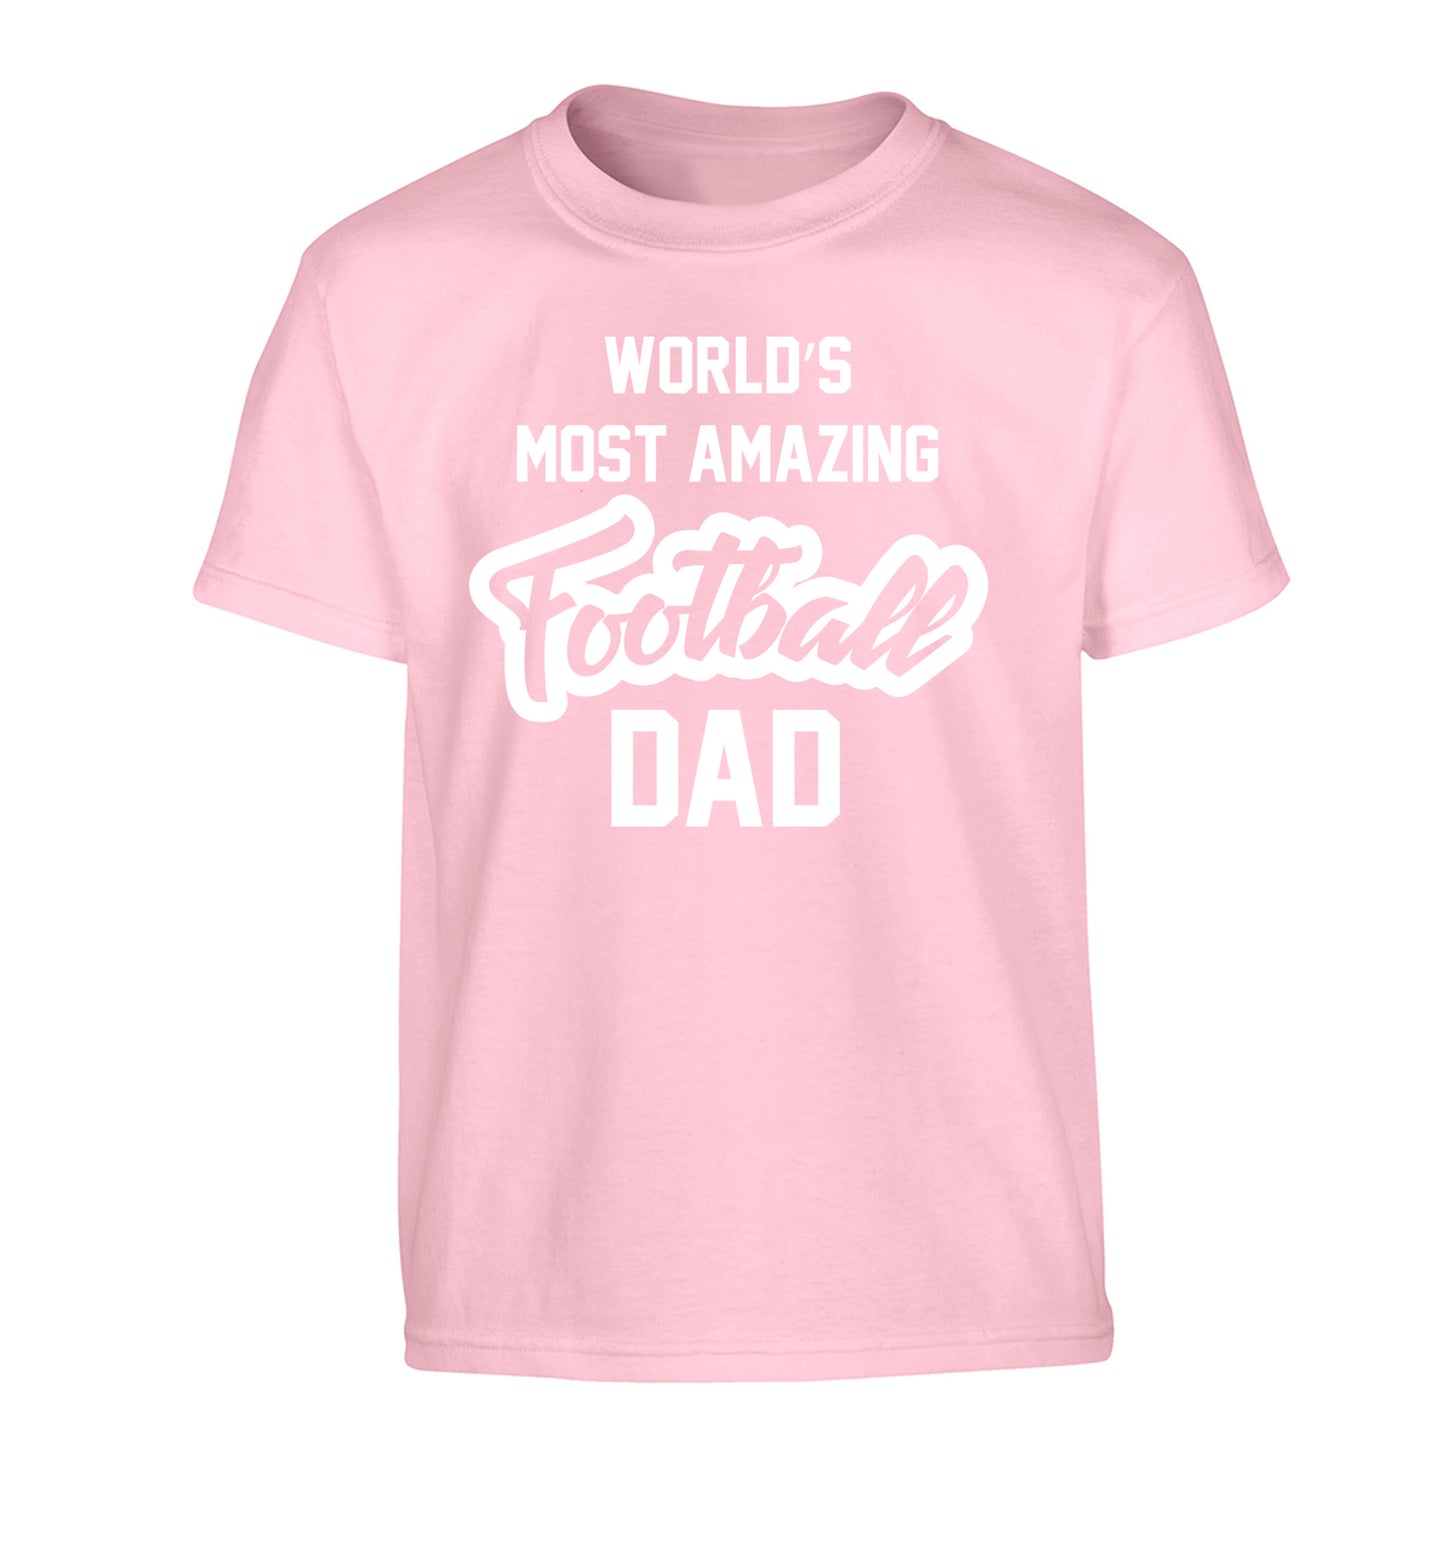 Worlds most amazing football dad Children's light pink Tshirt 12-14 Years